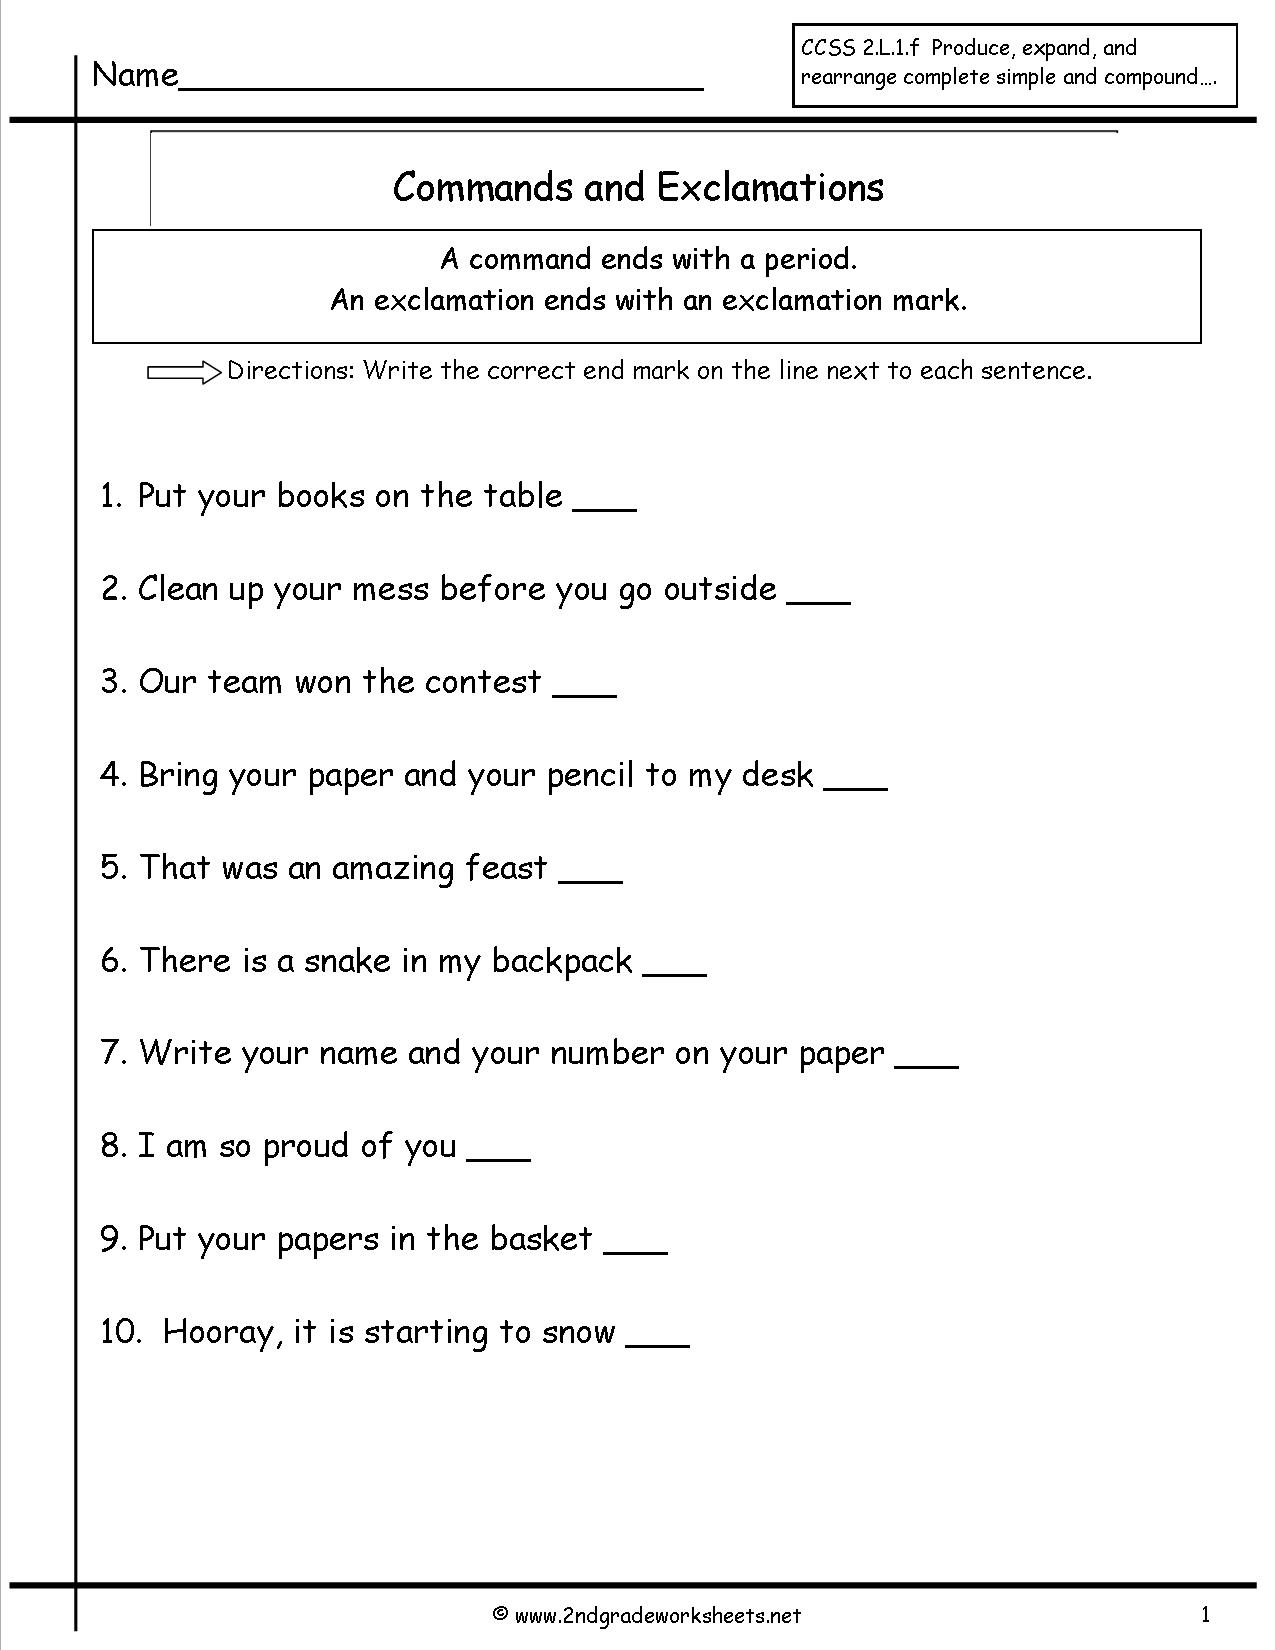 Exclamation Sentences Worksheet 2nd Grade Image